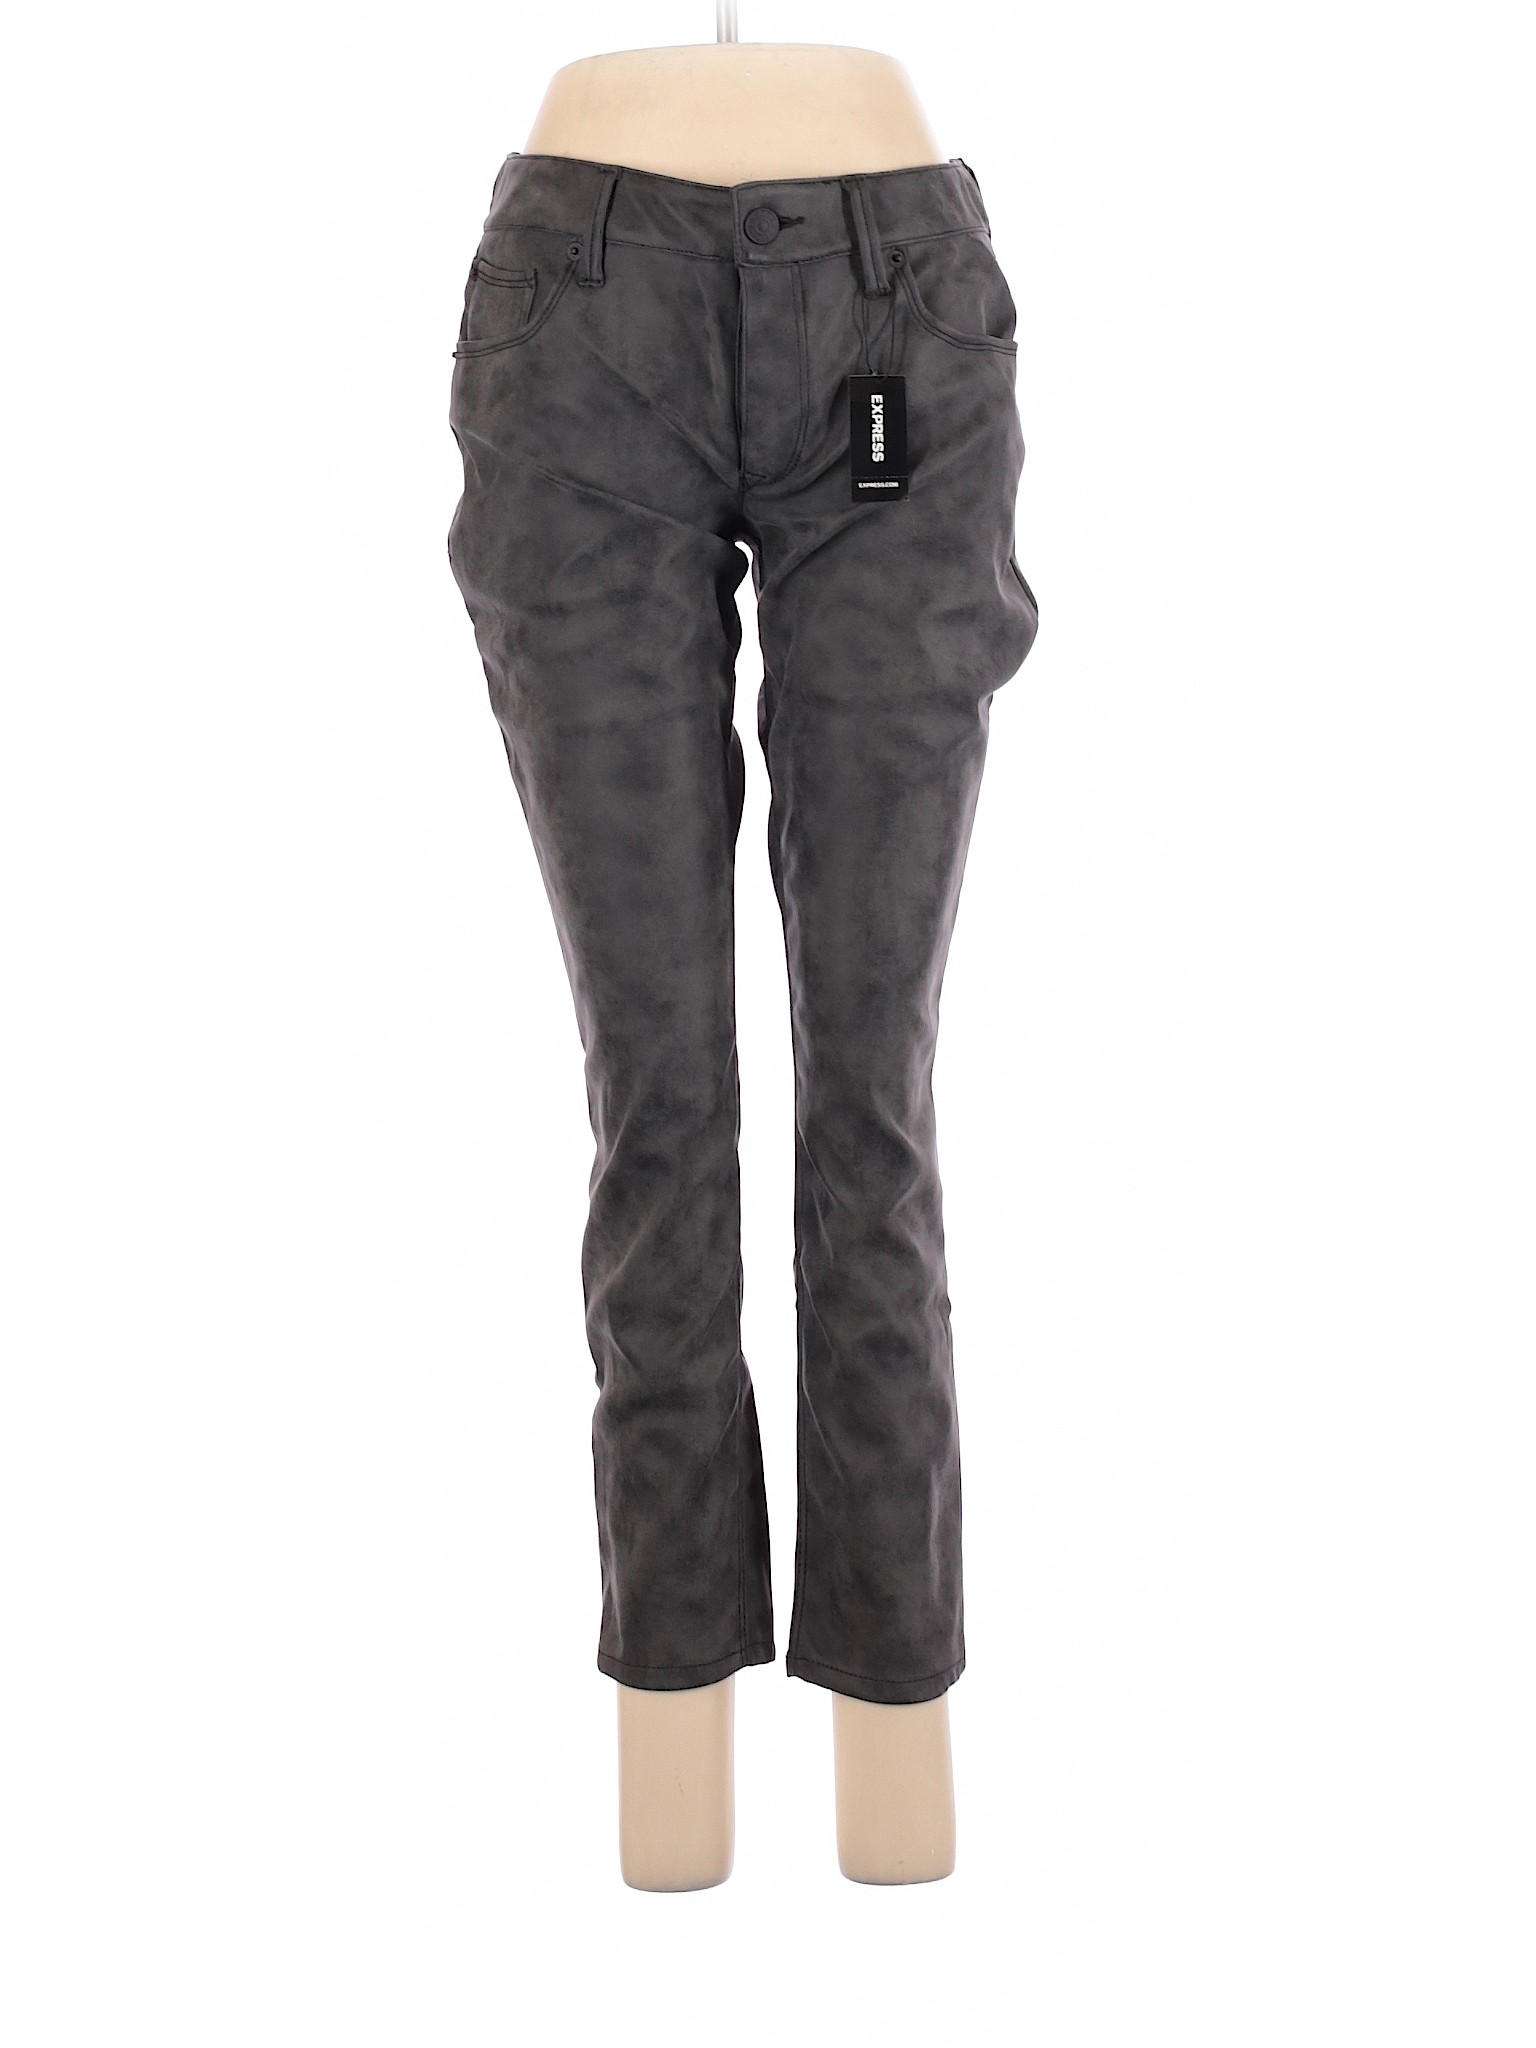 NWT Express Women Gray Faux Leather Pants 6 Petites | eBay